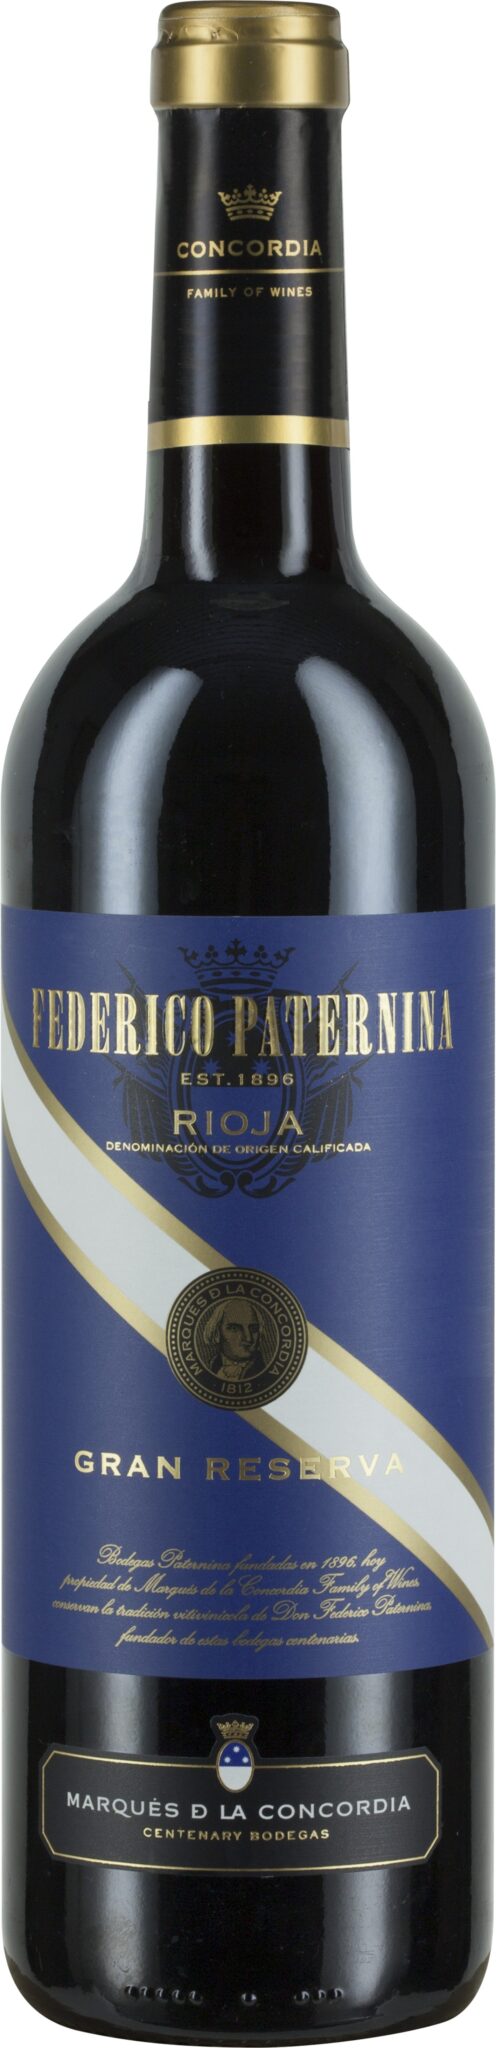 Federico Paternina Rioja DOCa Gran Reserva online bestellen